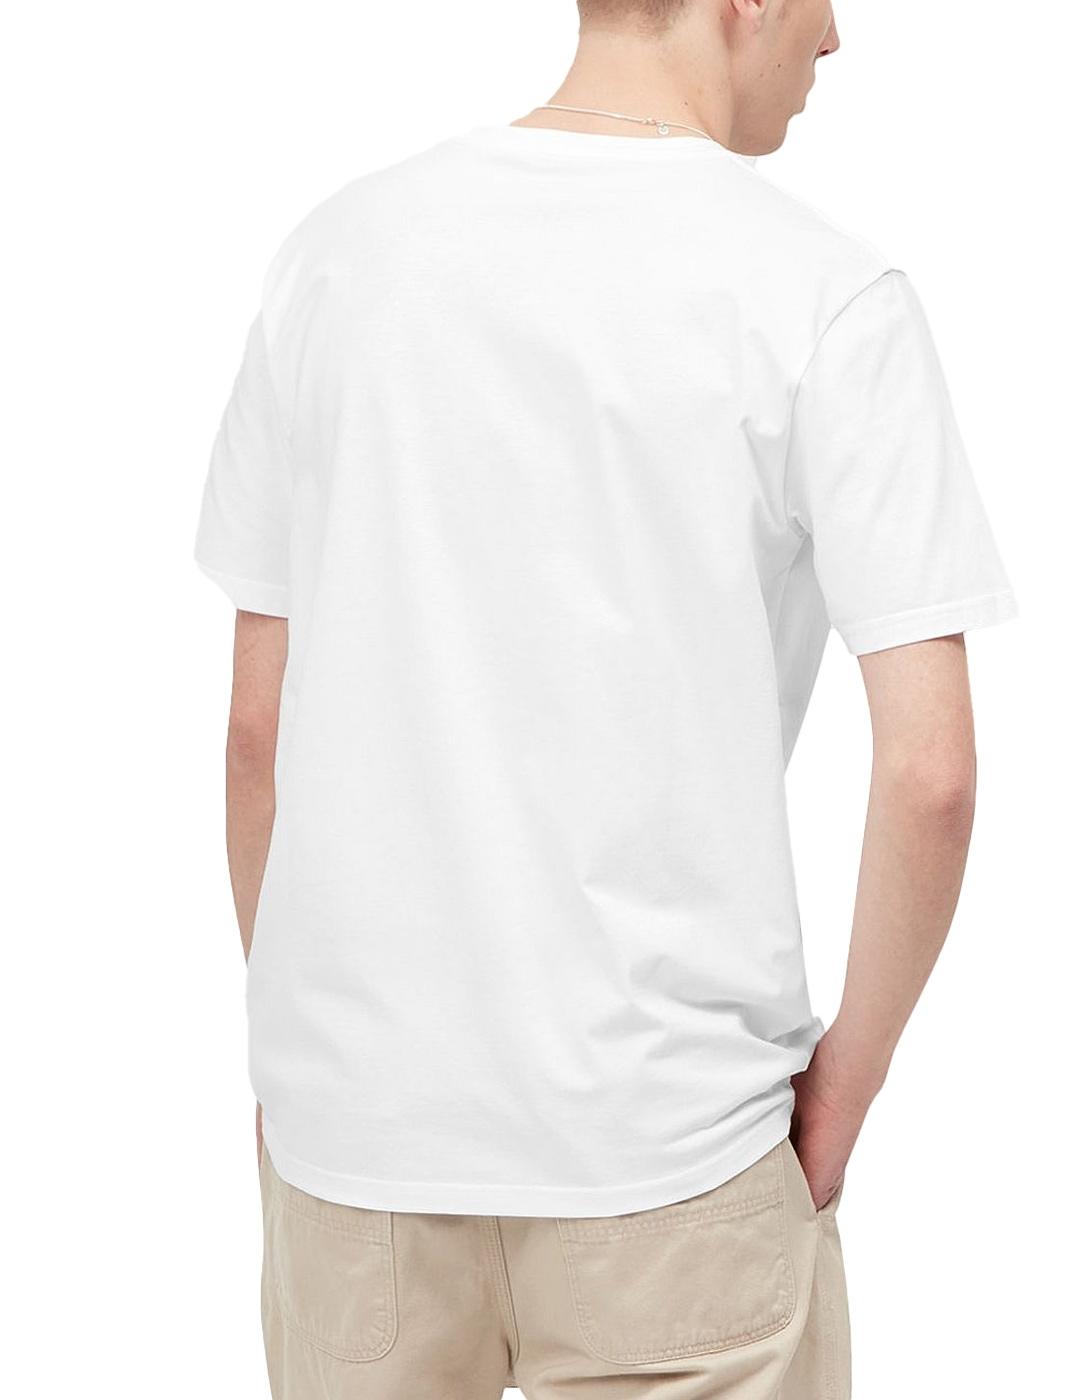 Camiseta Carhartt Pocket Blanco